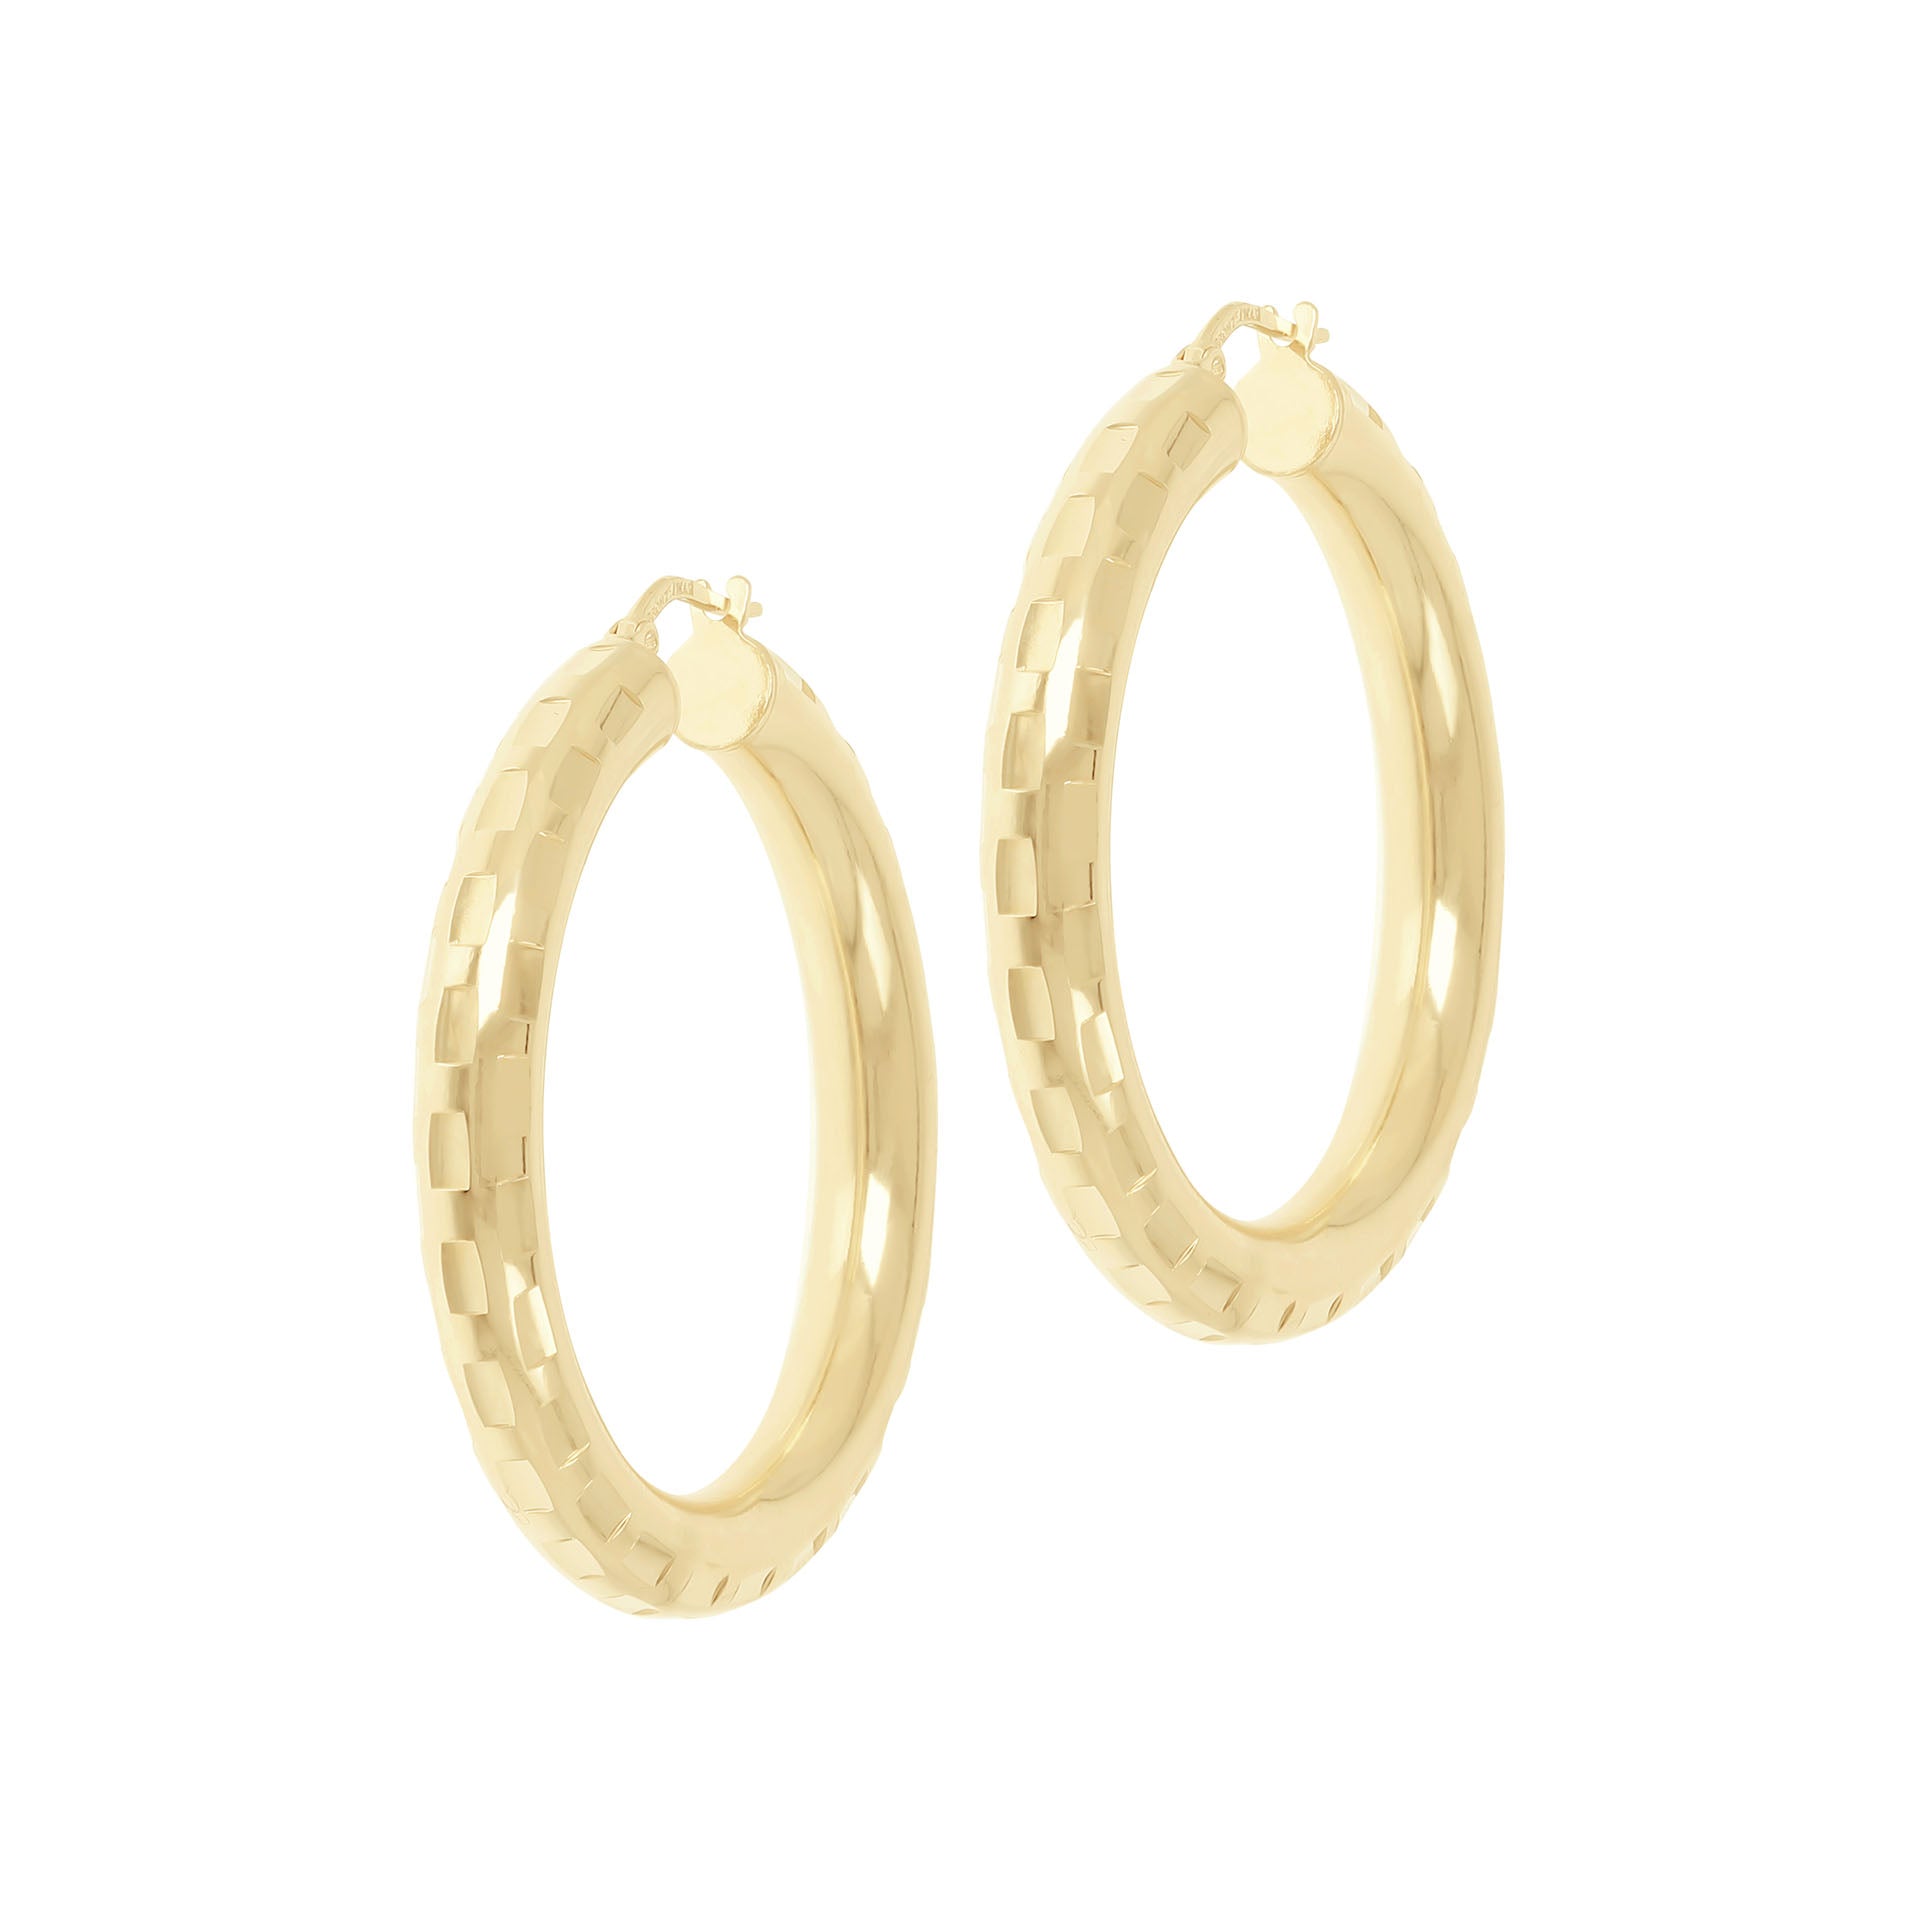 Bellissimo Bronzo Italian 1-1/2″ Diamond-Cut Hoop Earrings